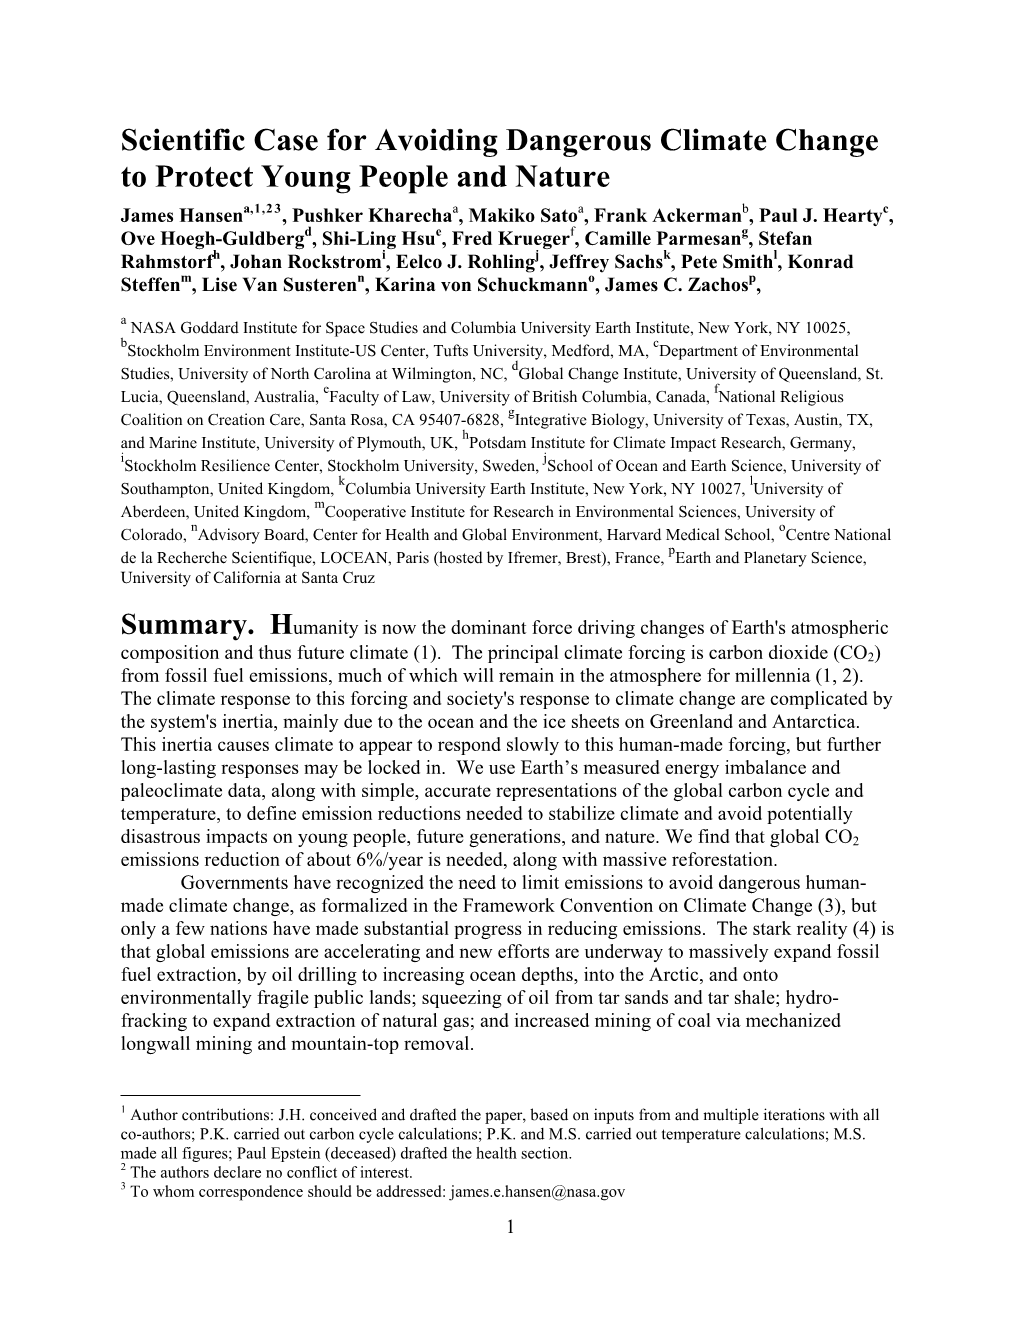 Scientific Case for Avoiding Dangerous Climate Change to Protect Young People and Nature James Hansena,1,2 3, Pushker Kharechaa, Makiko Satoa, Frank Ackermanb, Paul J